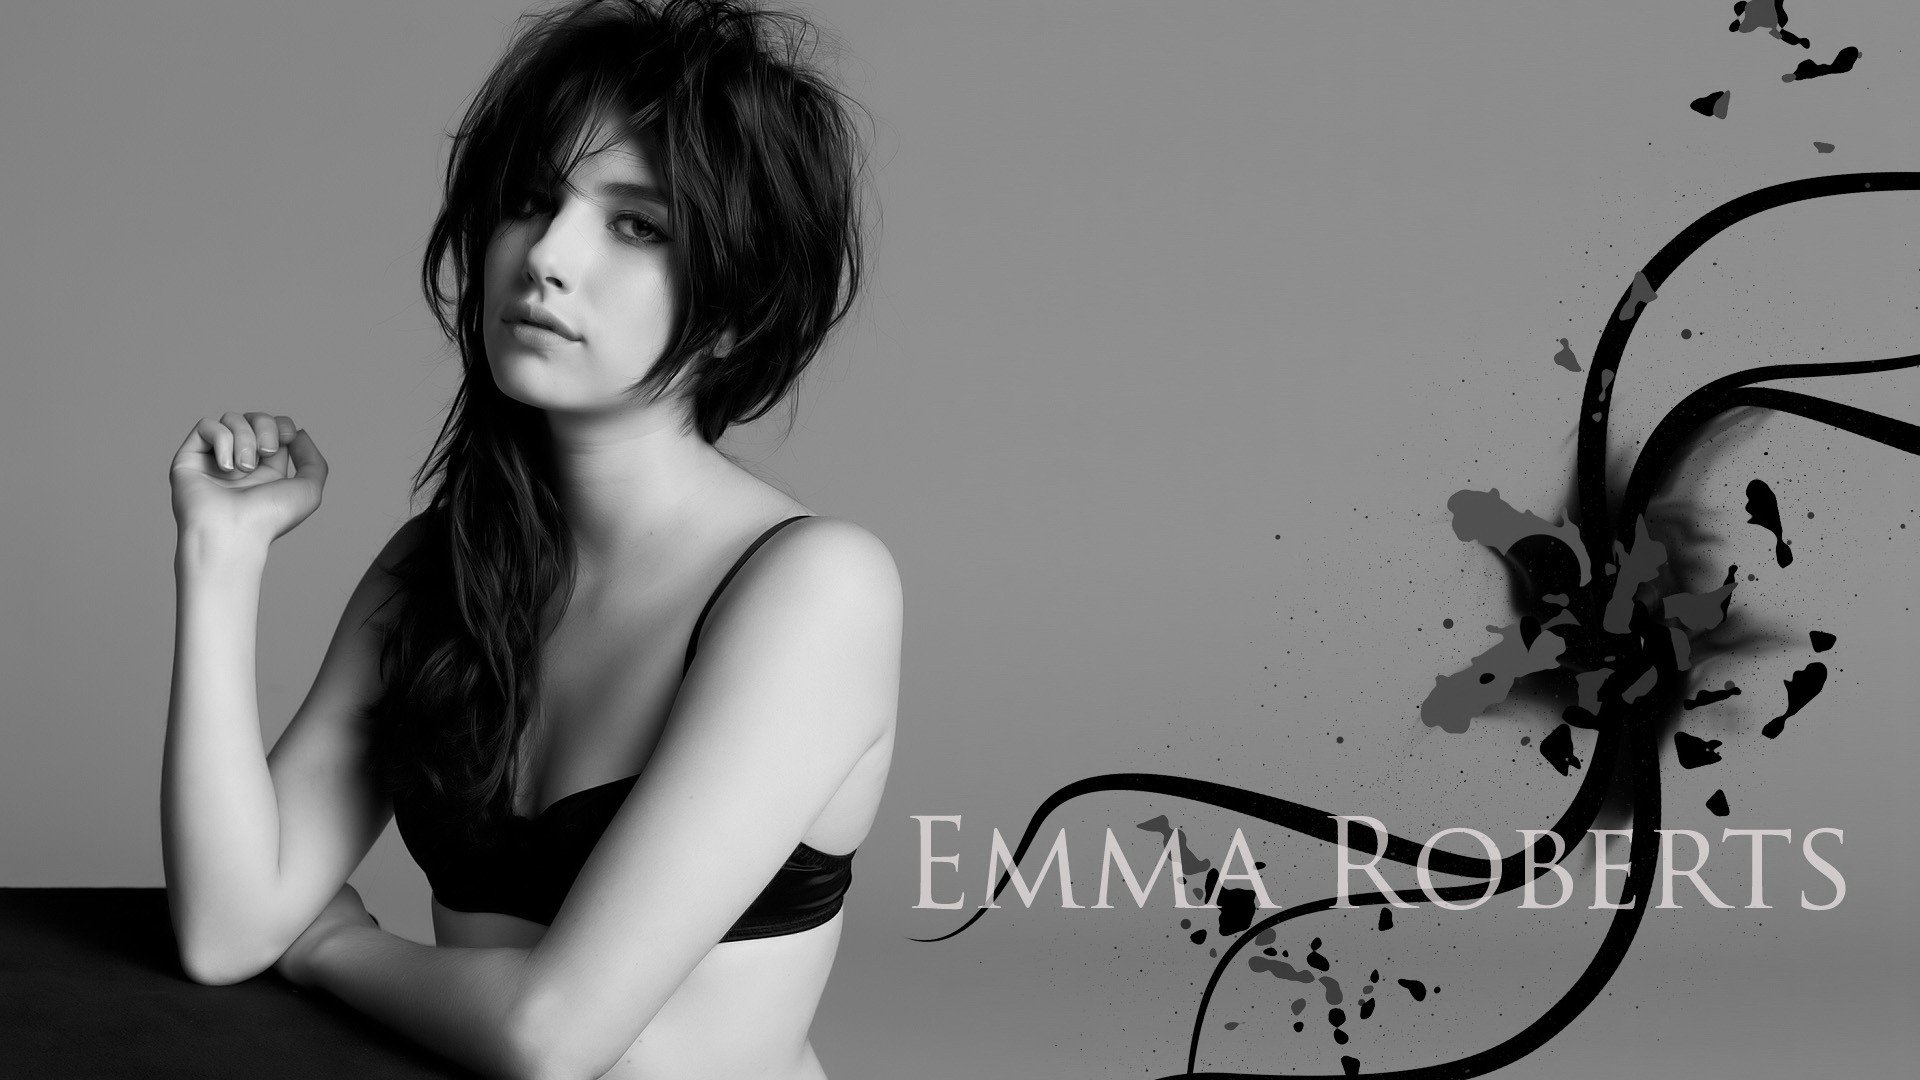 Celebrity Emma Roberts Hd Wallpaper 3265